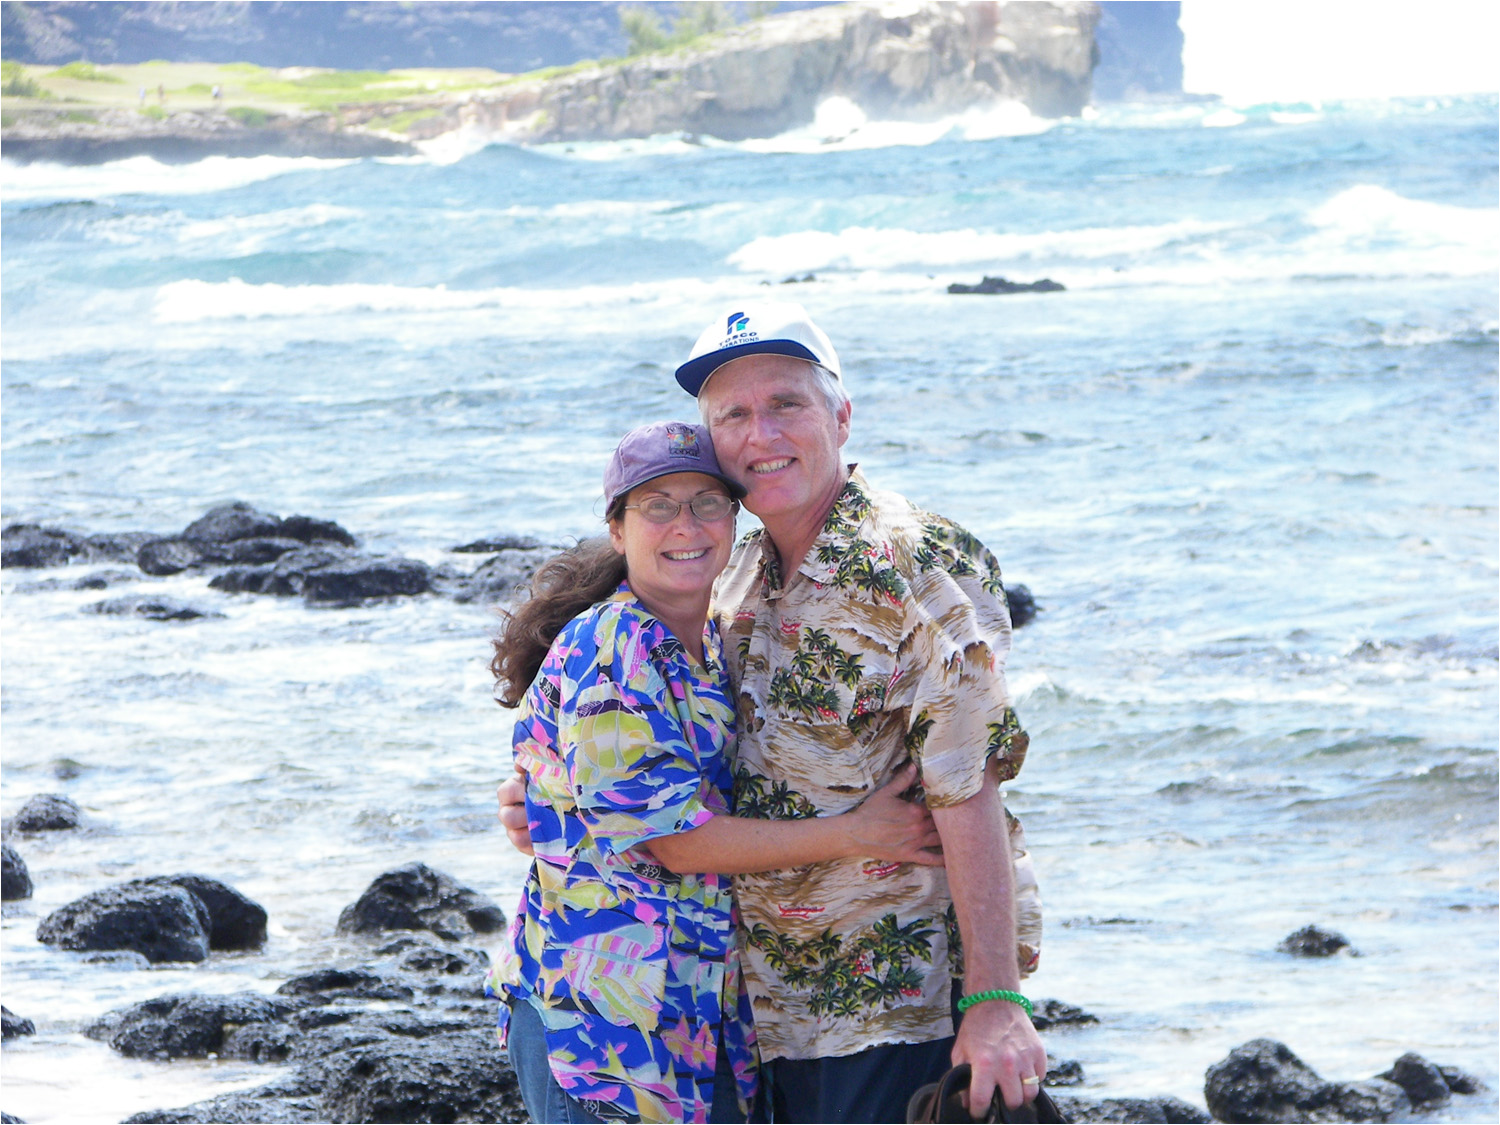 Bob and Kath at Maha'ulepu Beach.